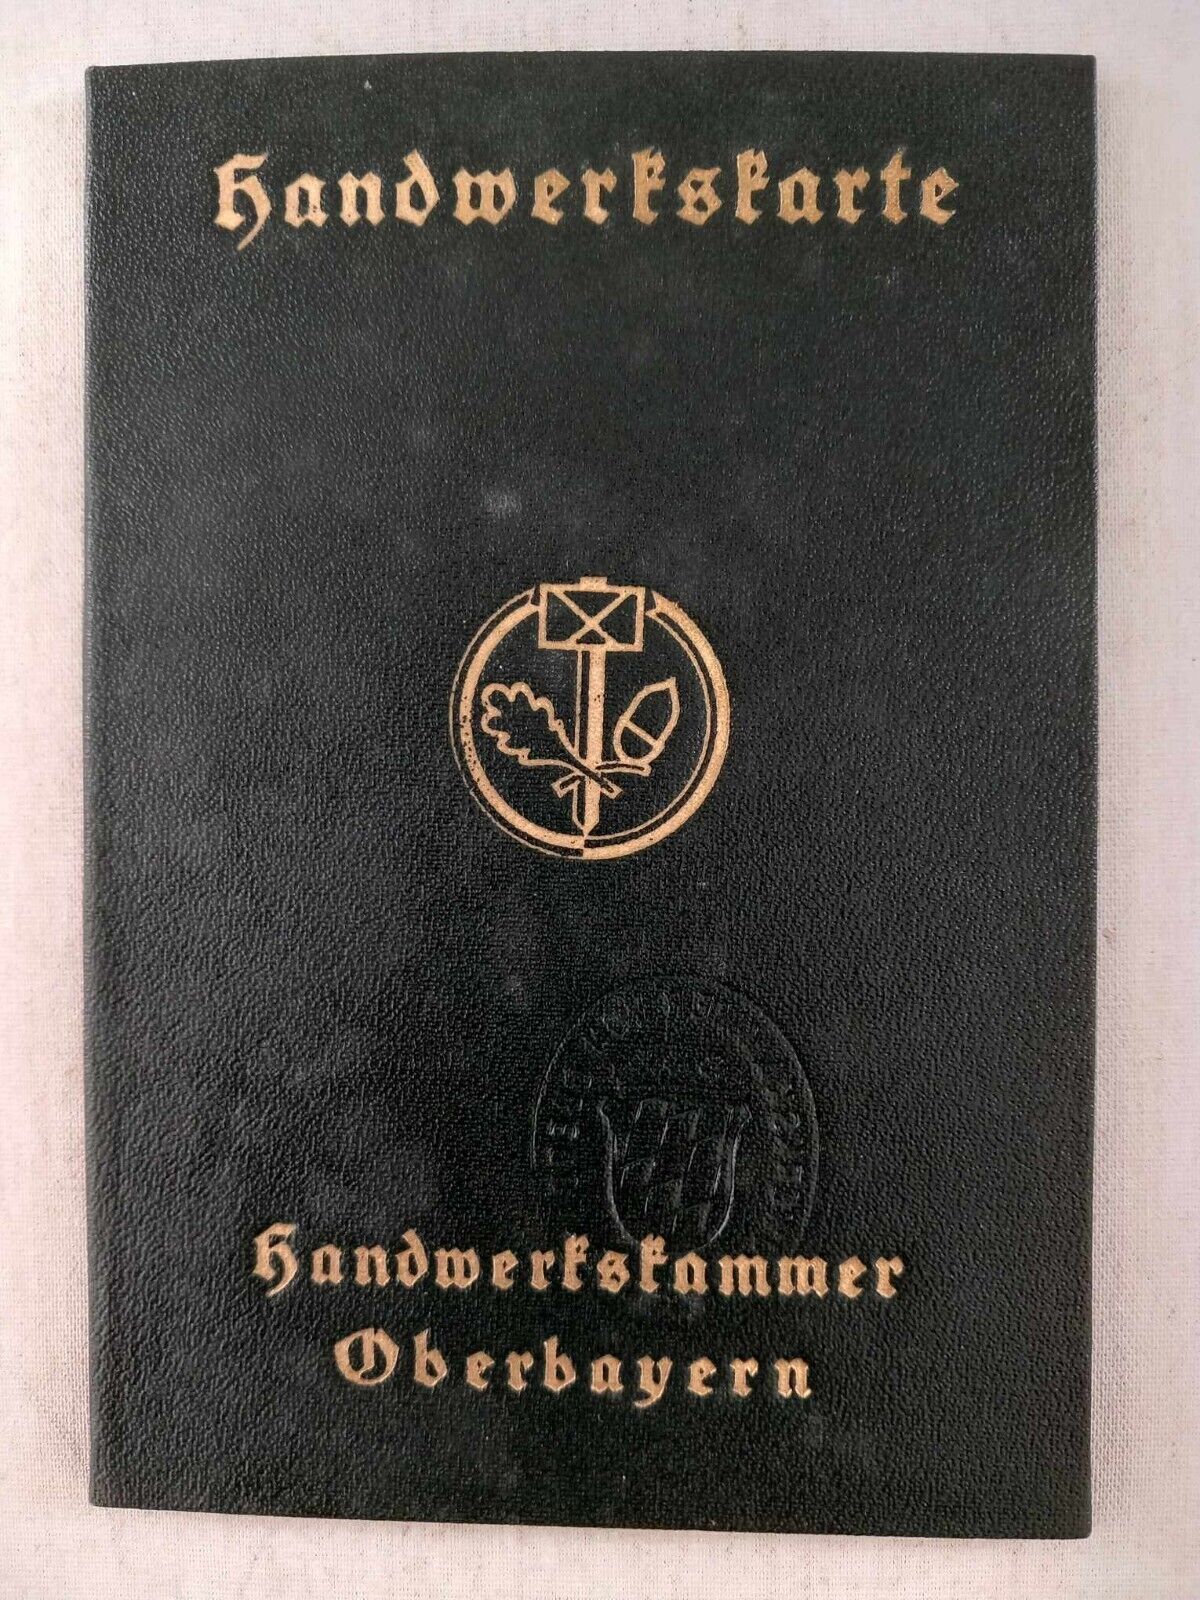 WW2 Handwerkskarte 1937 German hand work guild membership book